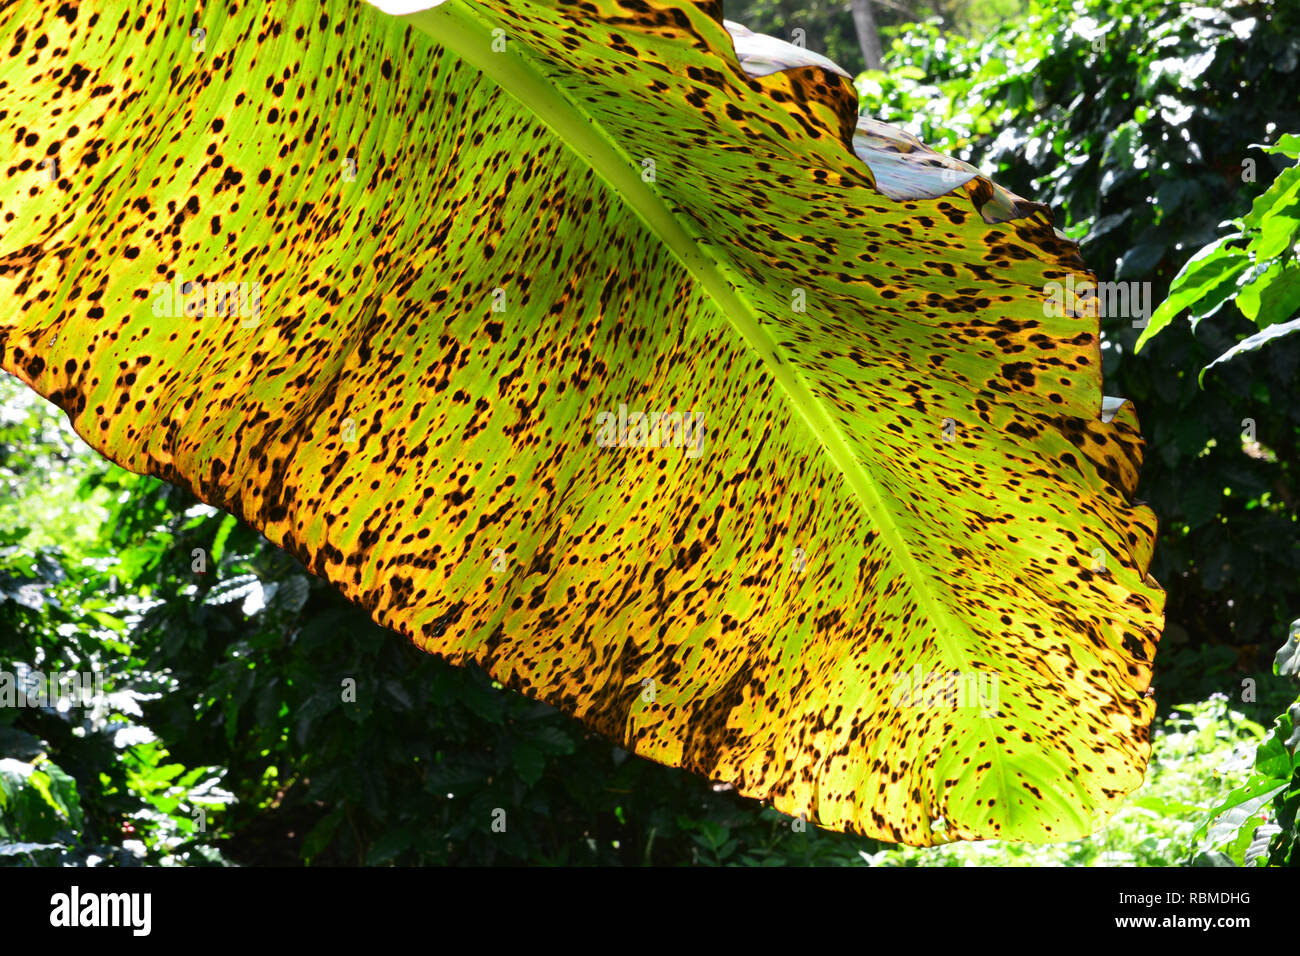 plant disease on a banana leaf Stock Photo